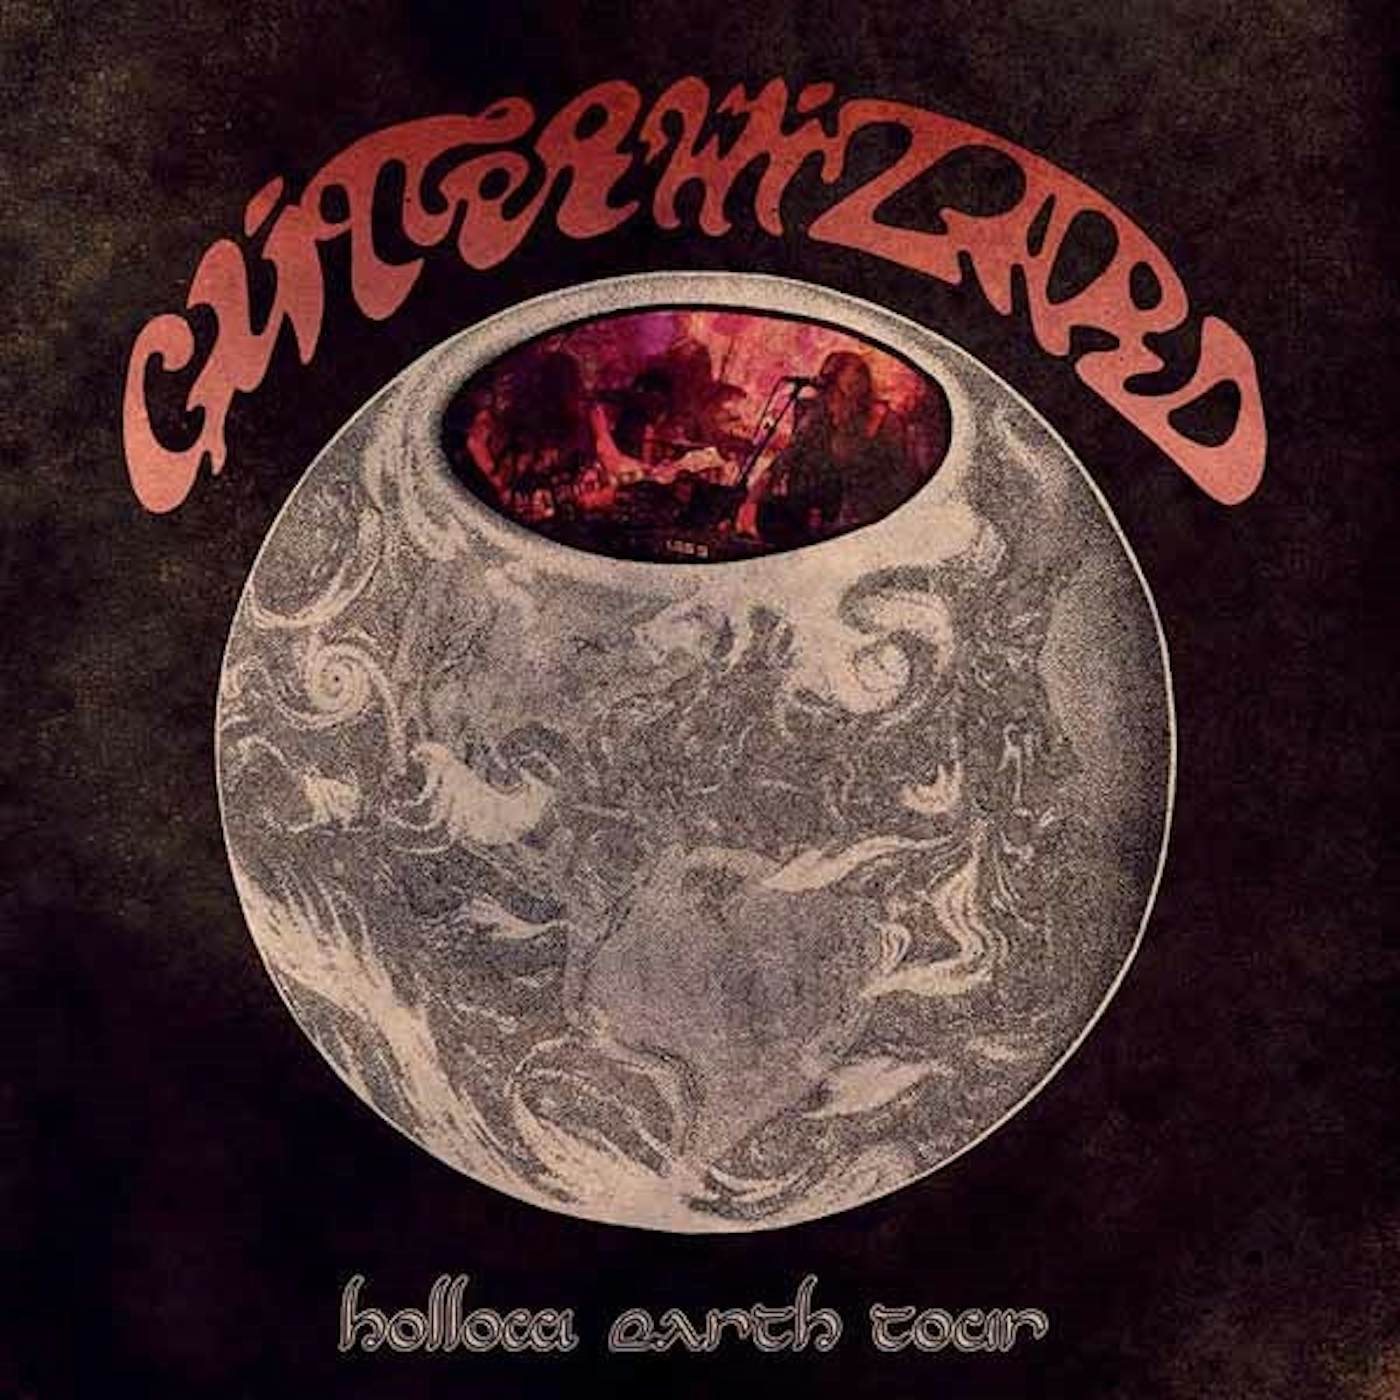 Glitter Wizard LP - Hollow Earth Tour (Red Vinyl)